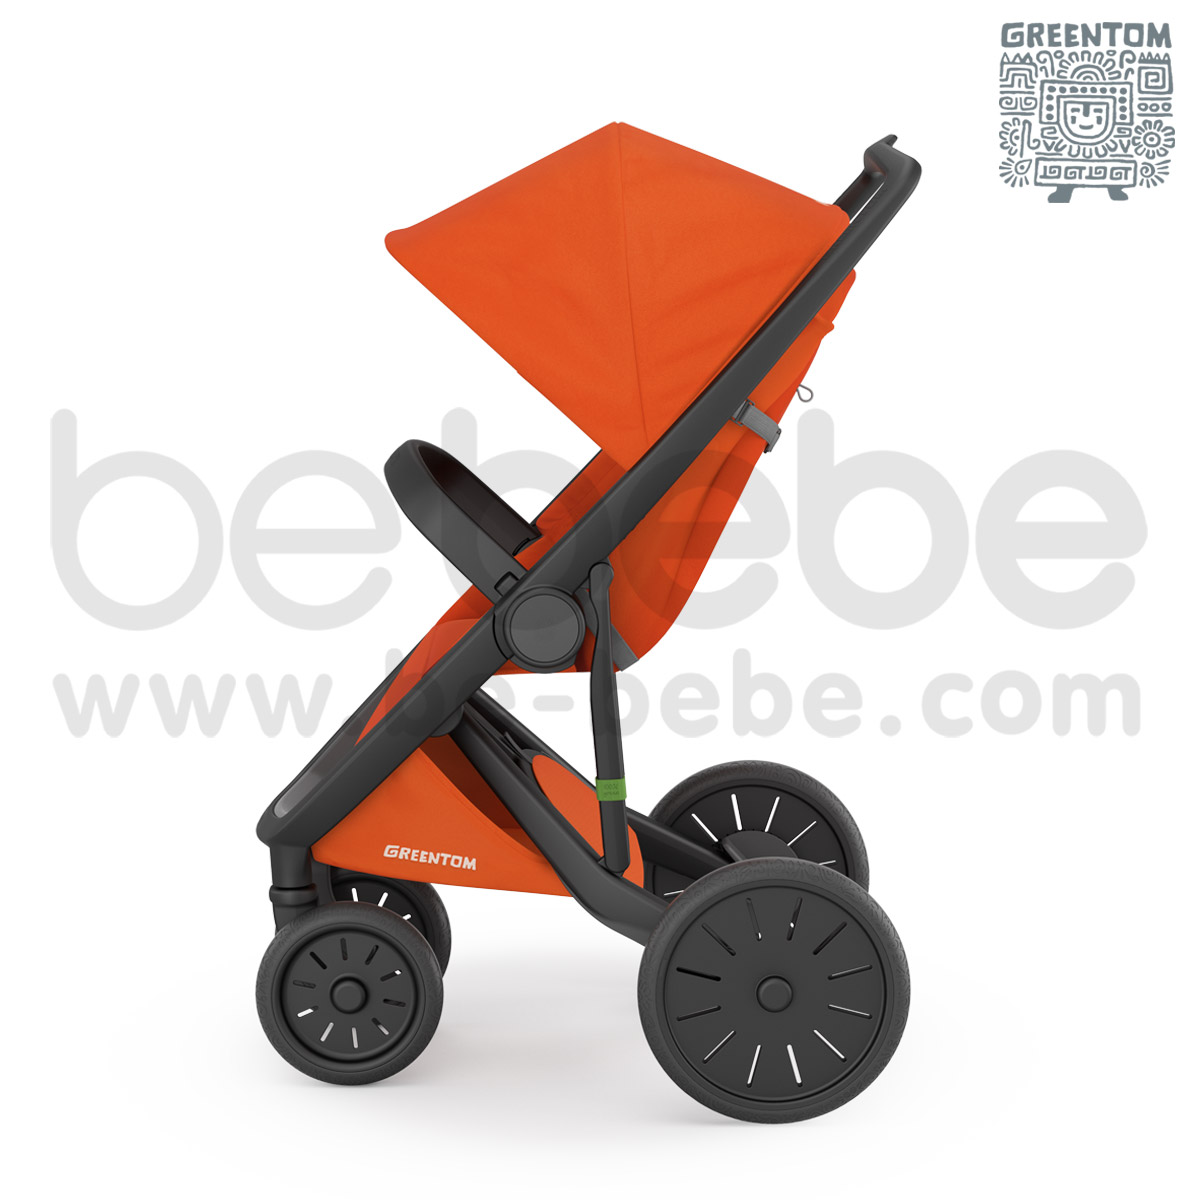 Greentom : Classic Black Frame Stroller - Orange